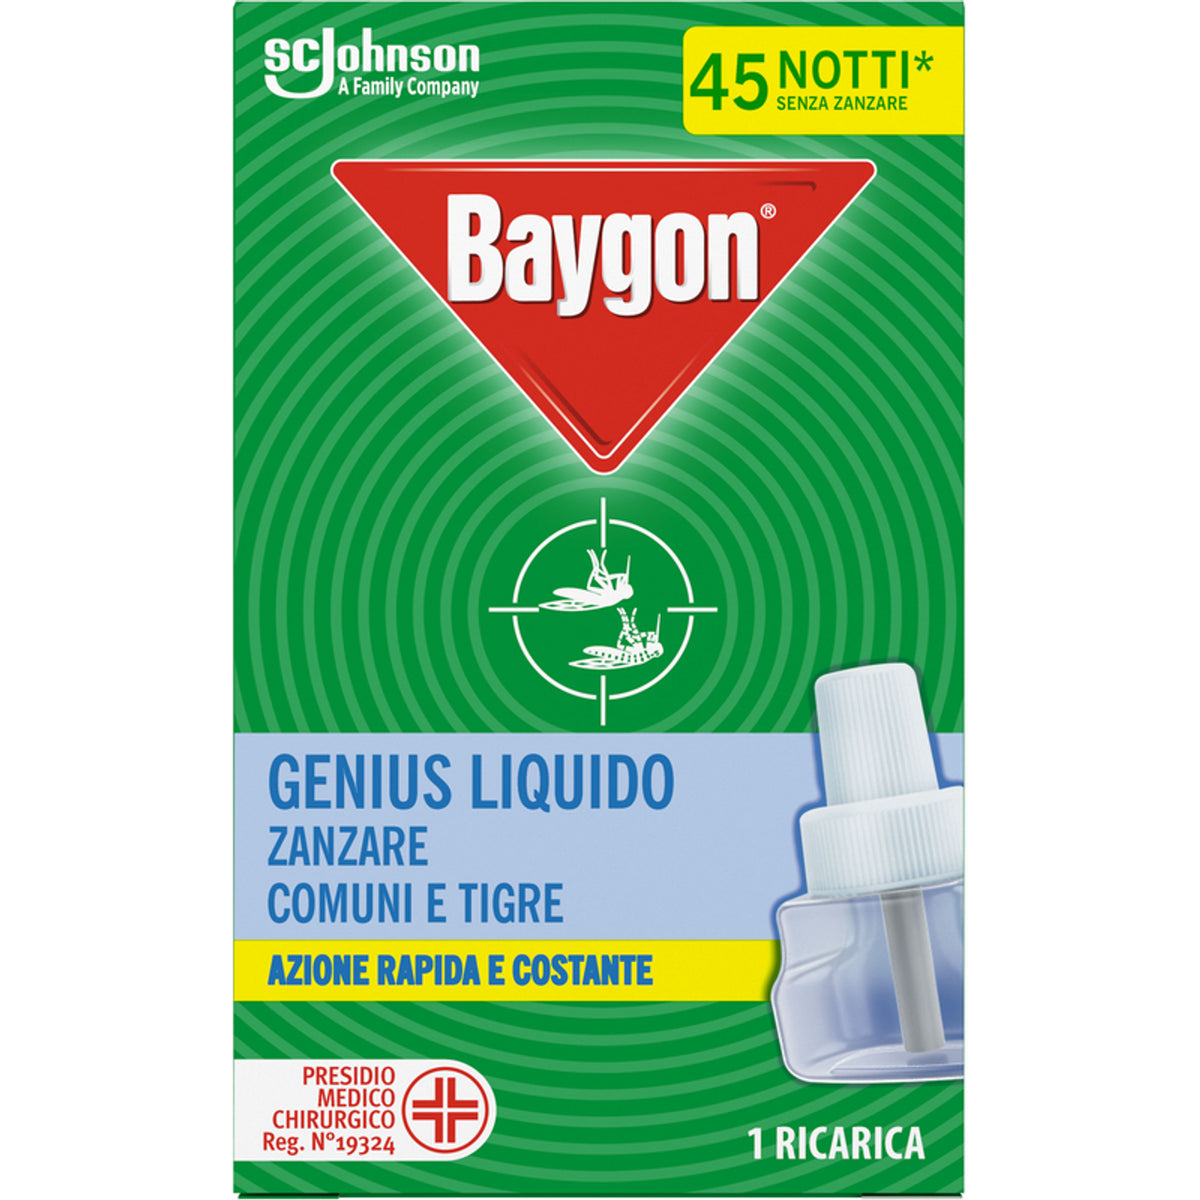 Baygon Genius Inseccicid Mosquito tekućina punjenja 45 noći